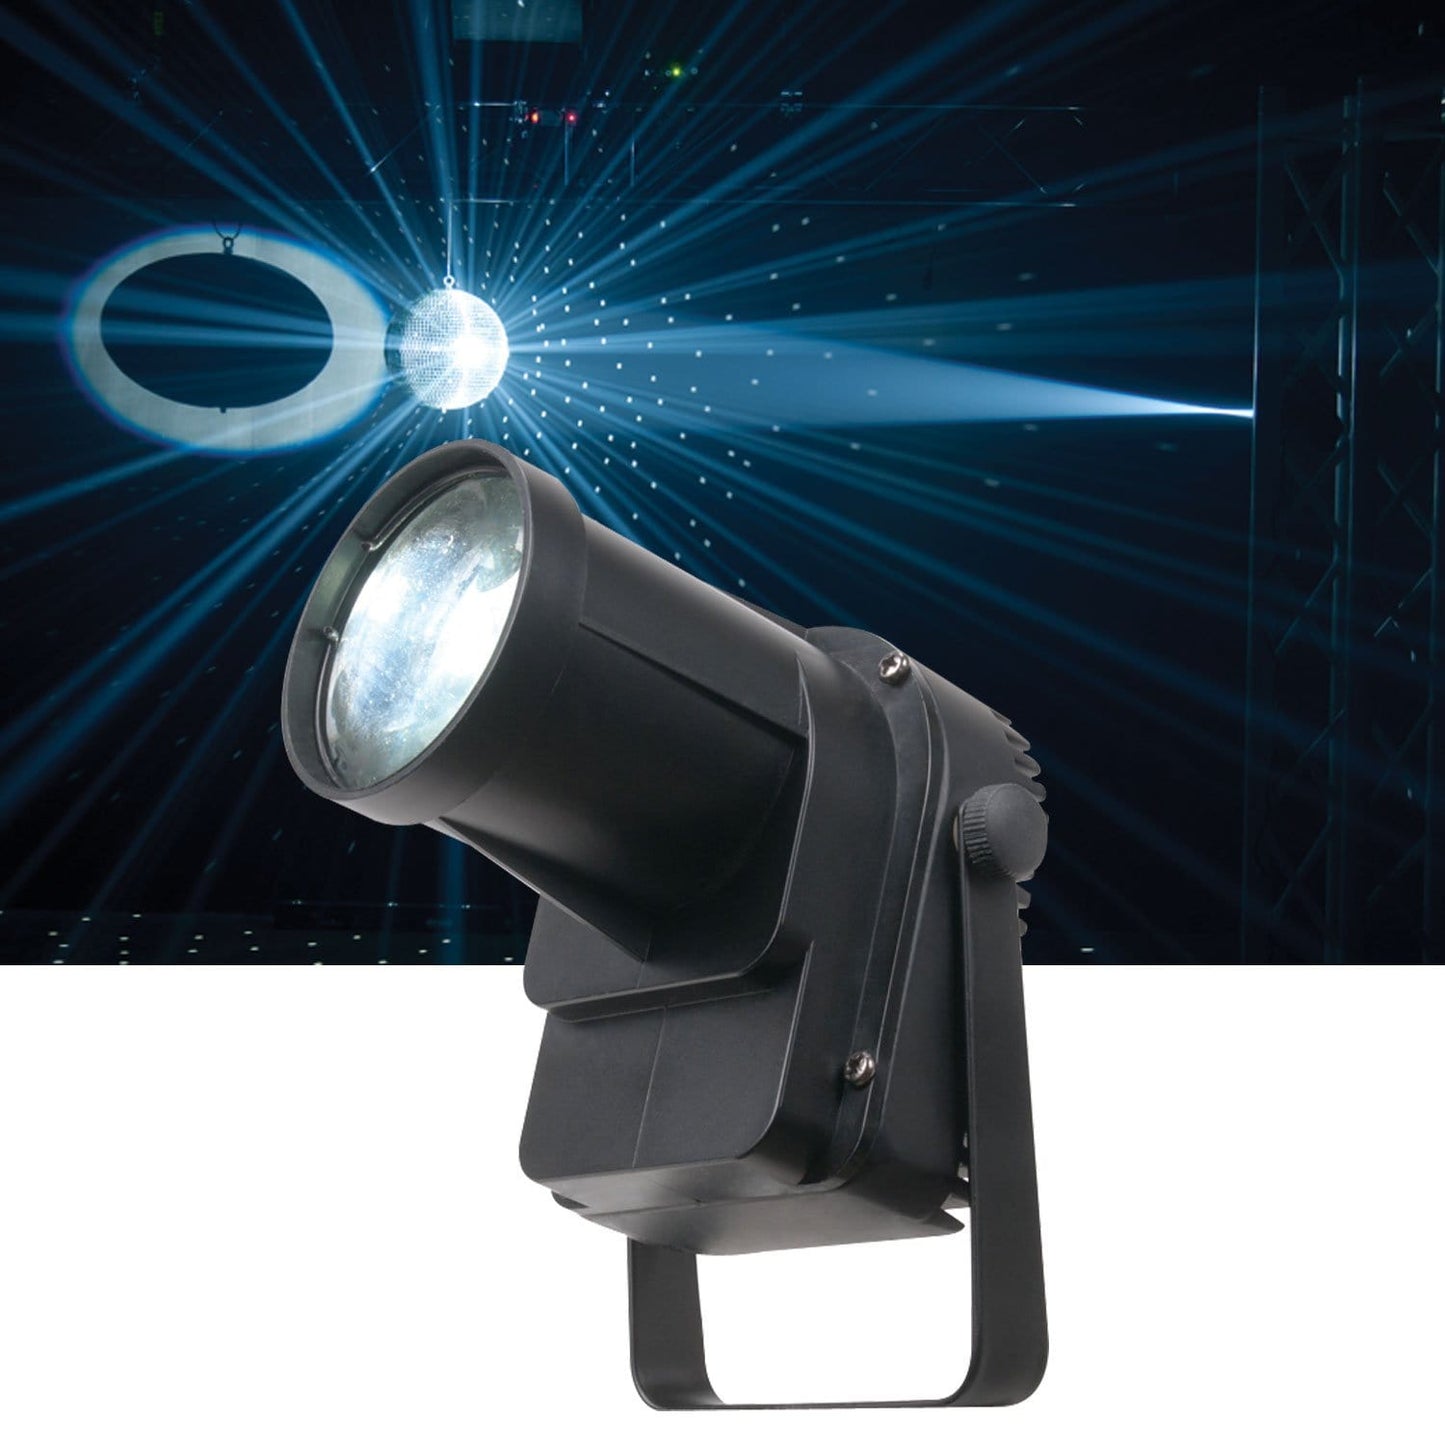 Eliminator Mini Spot LED 1x3-Watt White Pinspot Light - PSSL ProSound and Stage Lighting